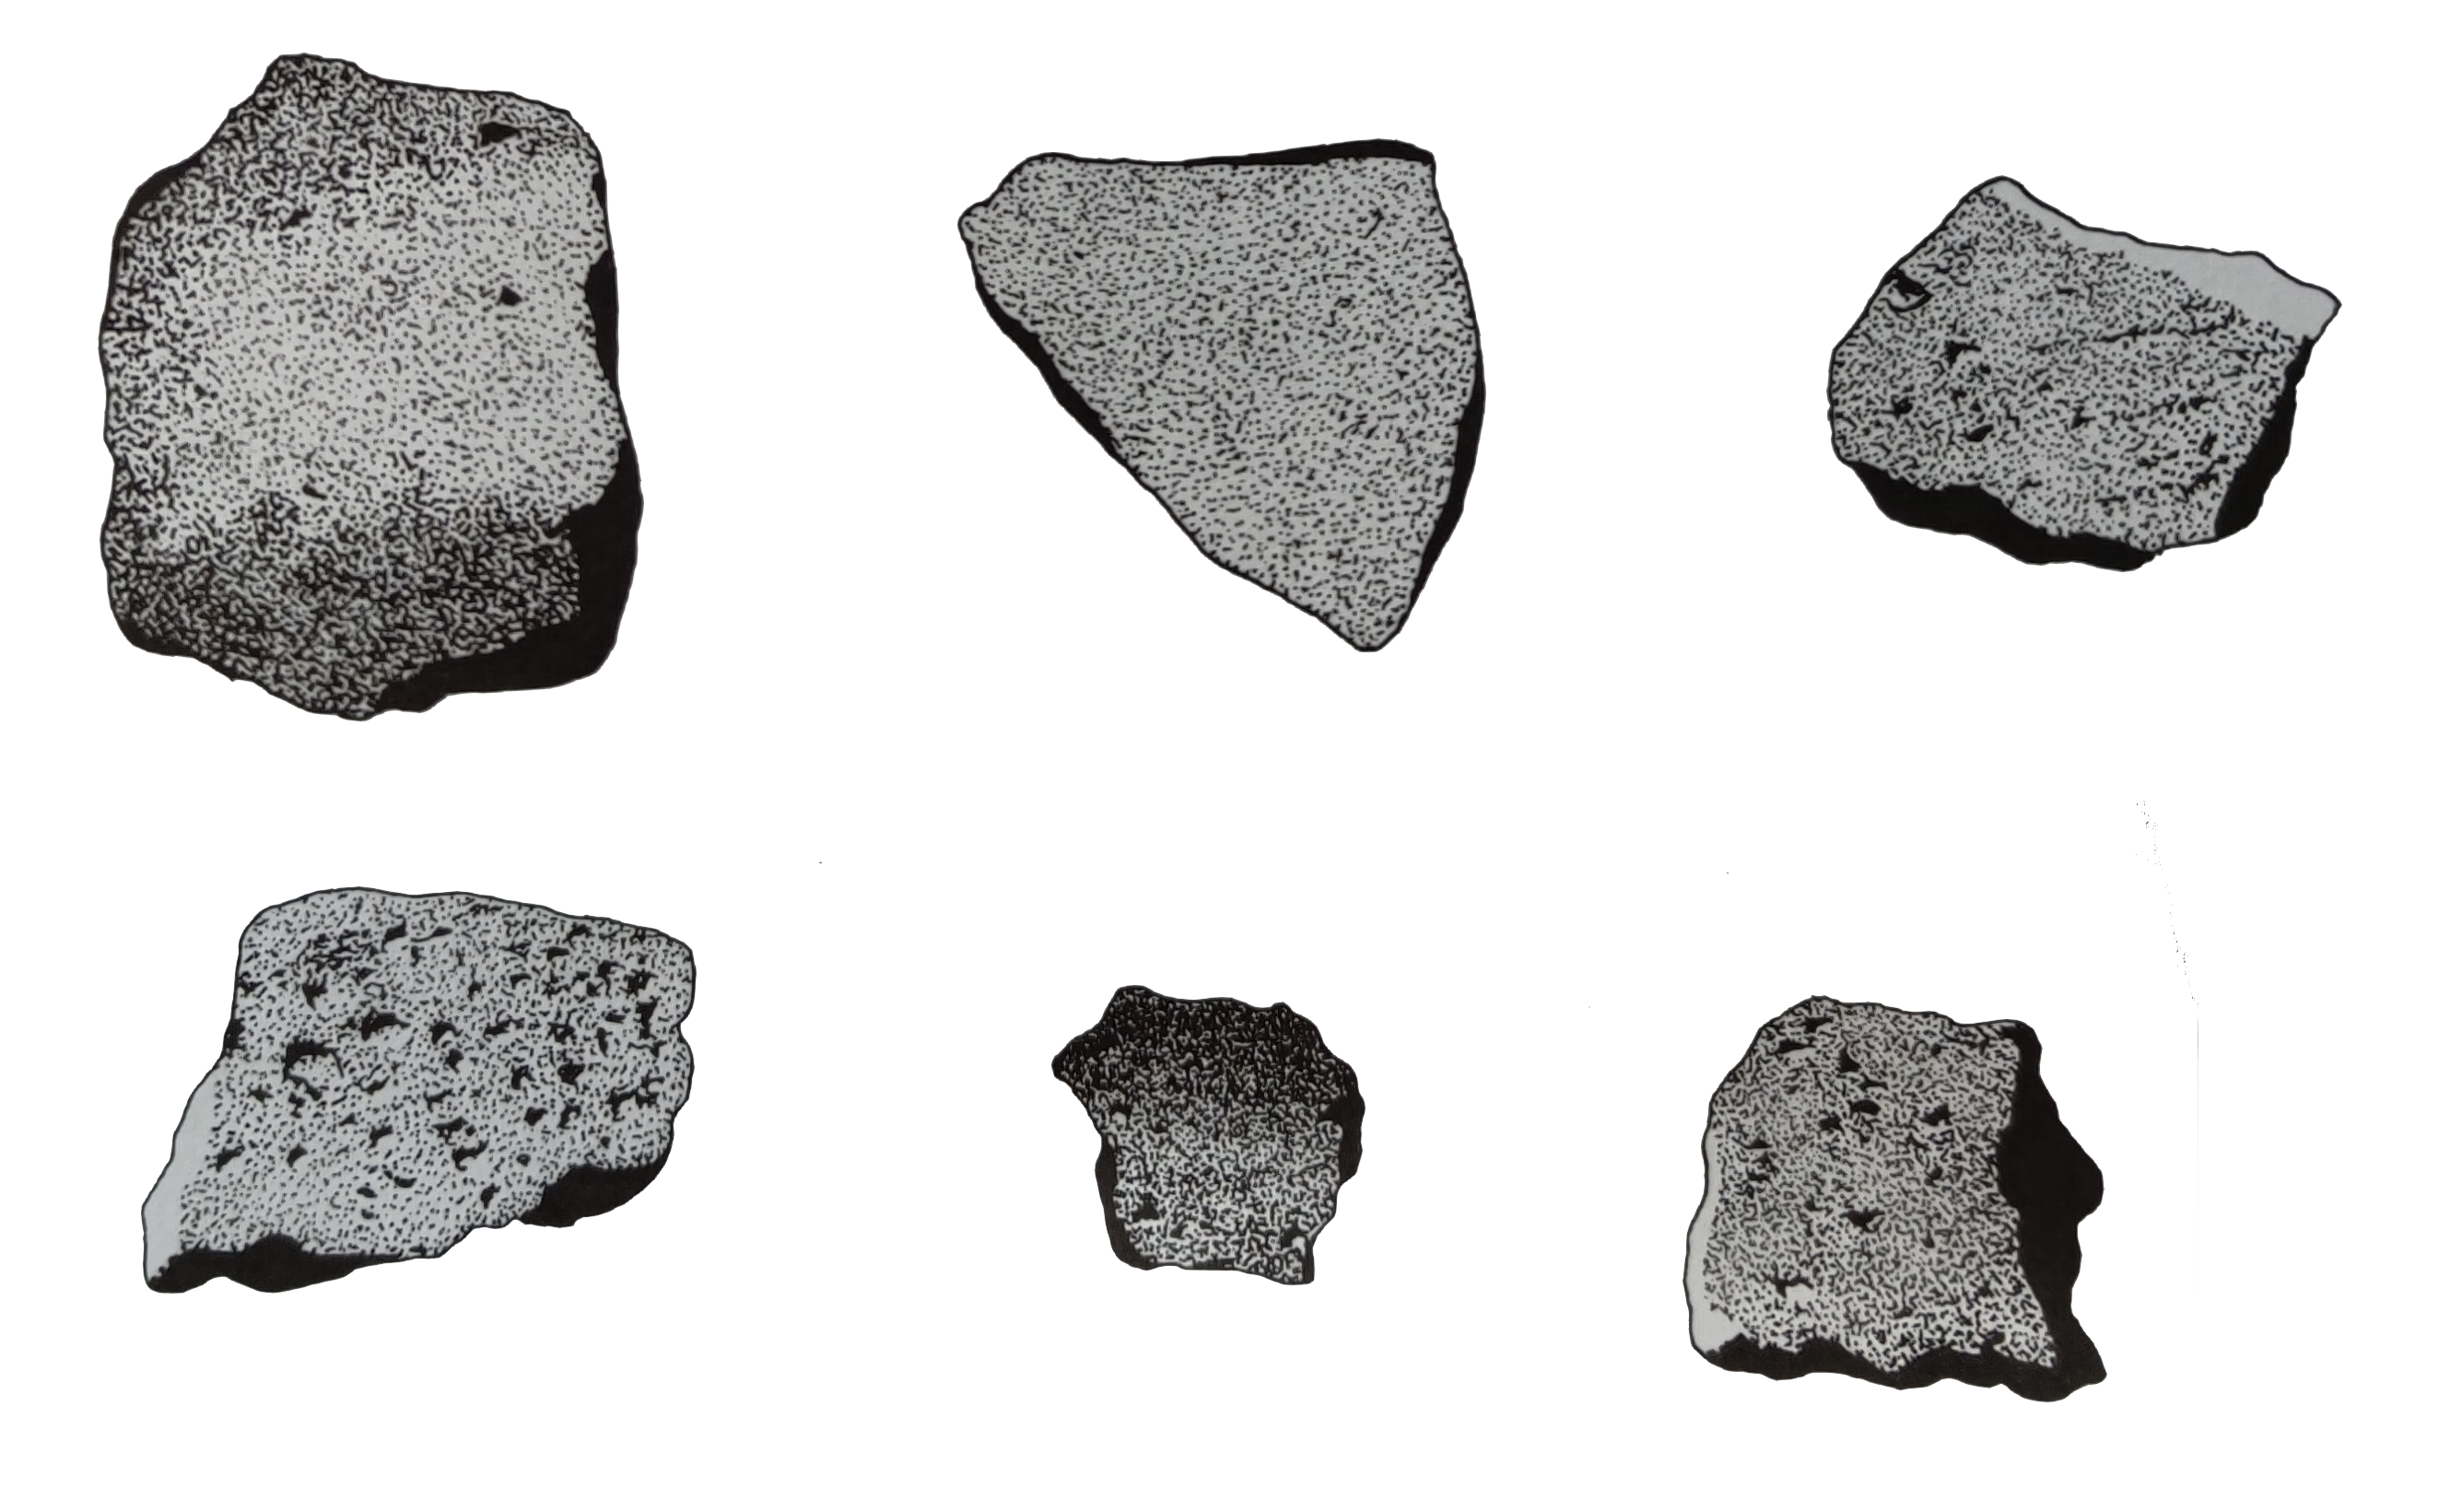 Dibujo de los fragmentos cerámicos encontrados por Fraile. Fuente: "Catálogo de castros cántabros" (2004)